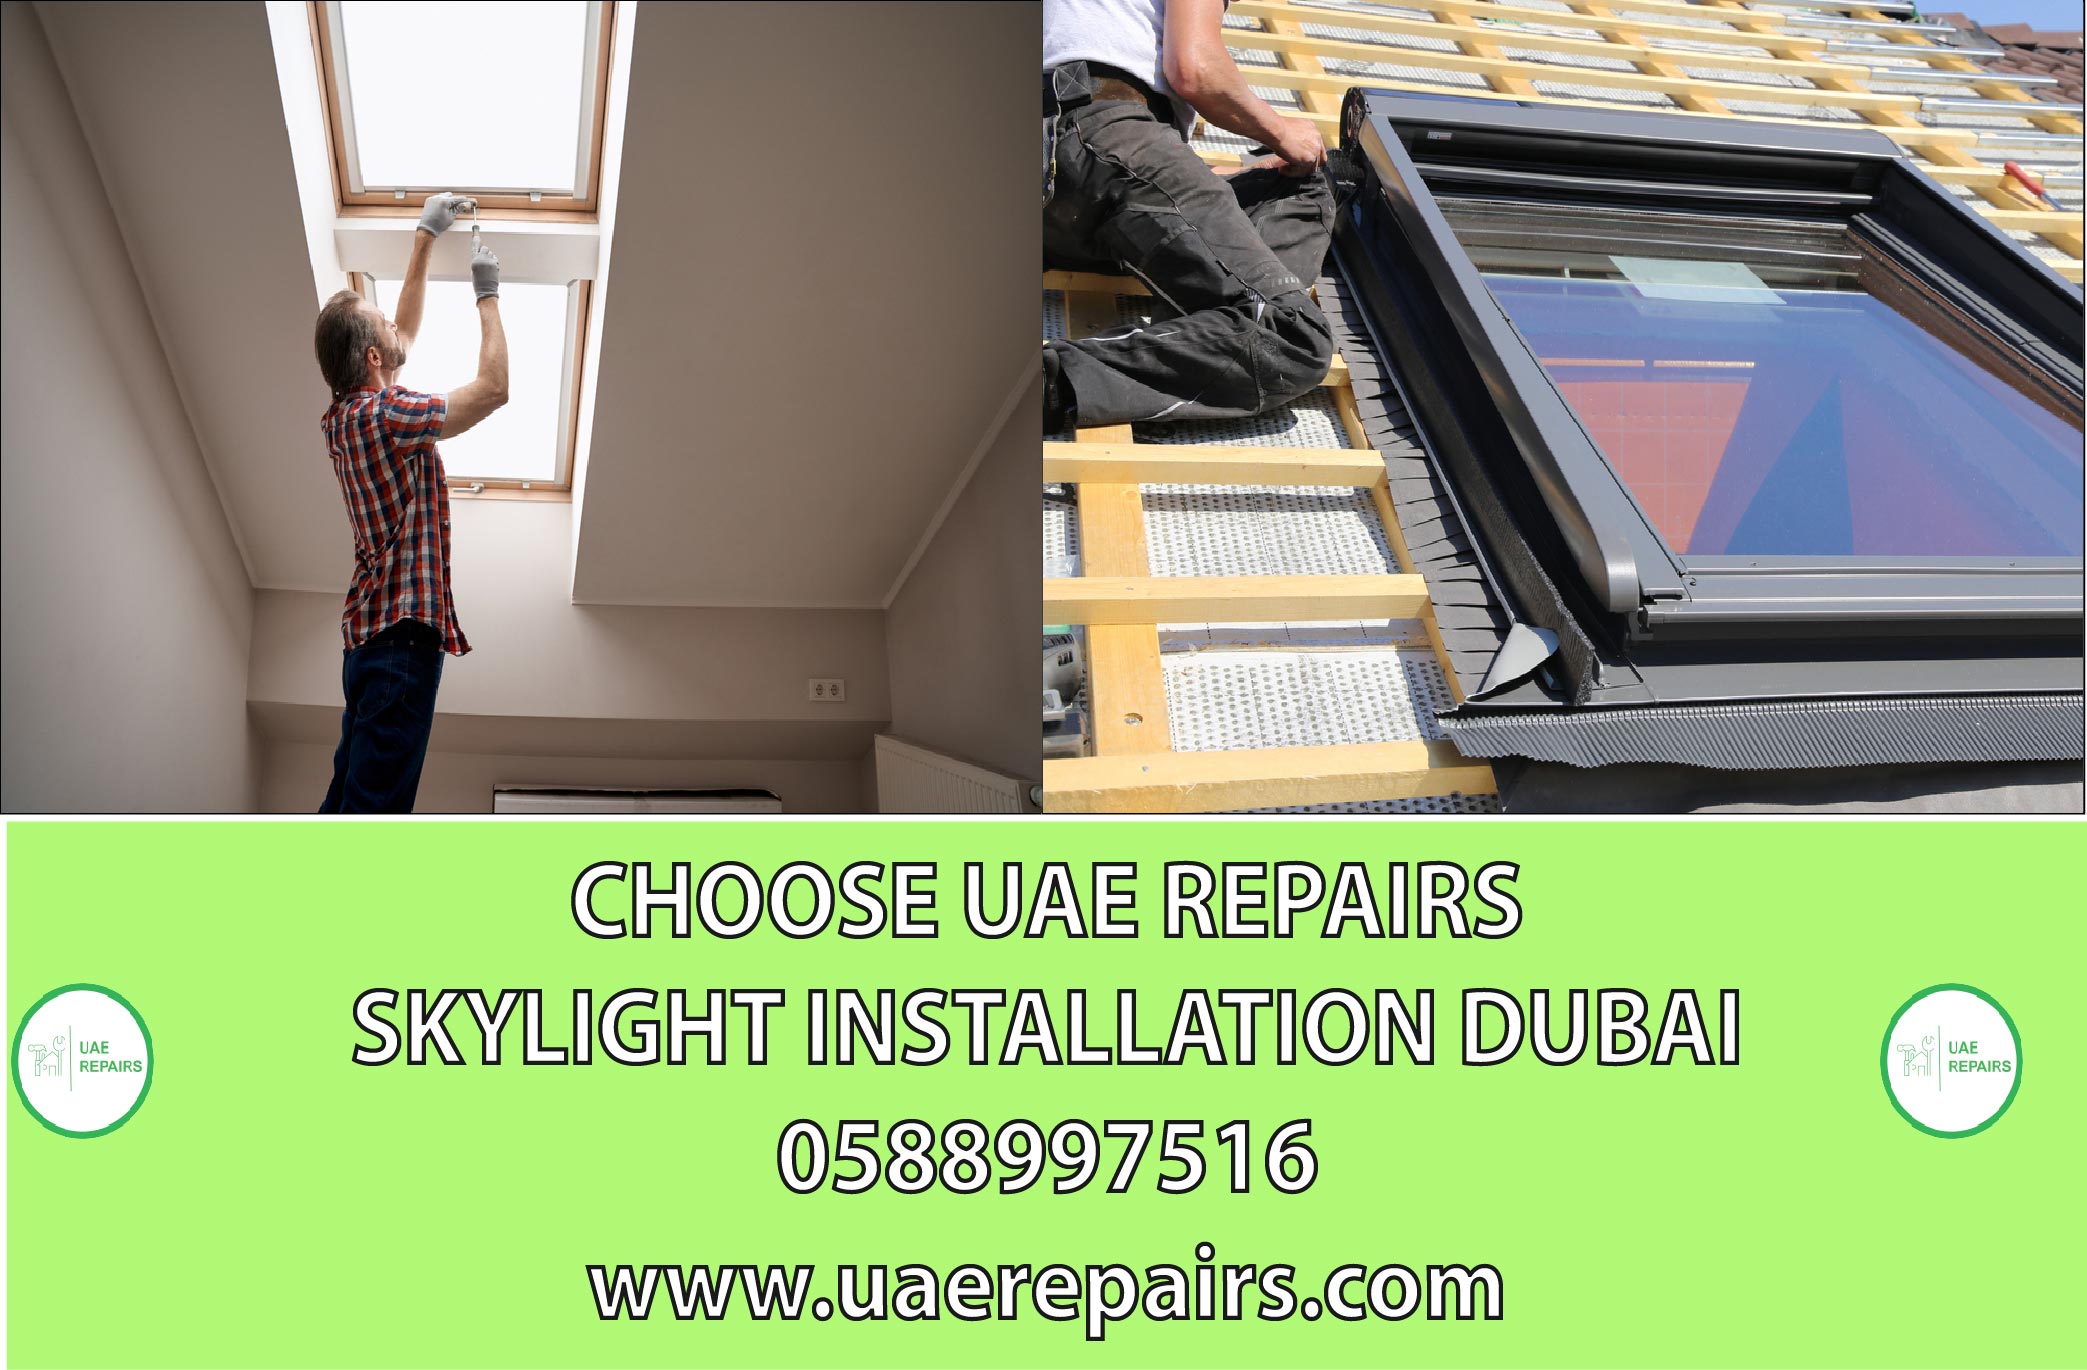 CHOOSE UAE REPAIRS FOR SKYLIGHT INSTALLATION DUBAI 0588997516